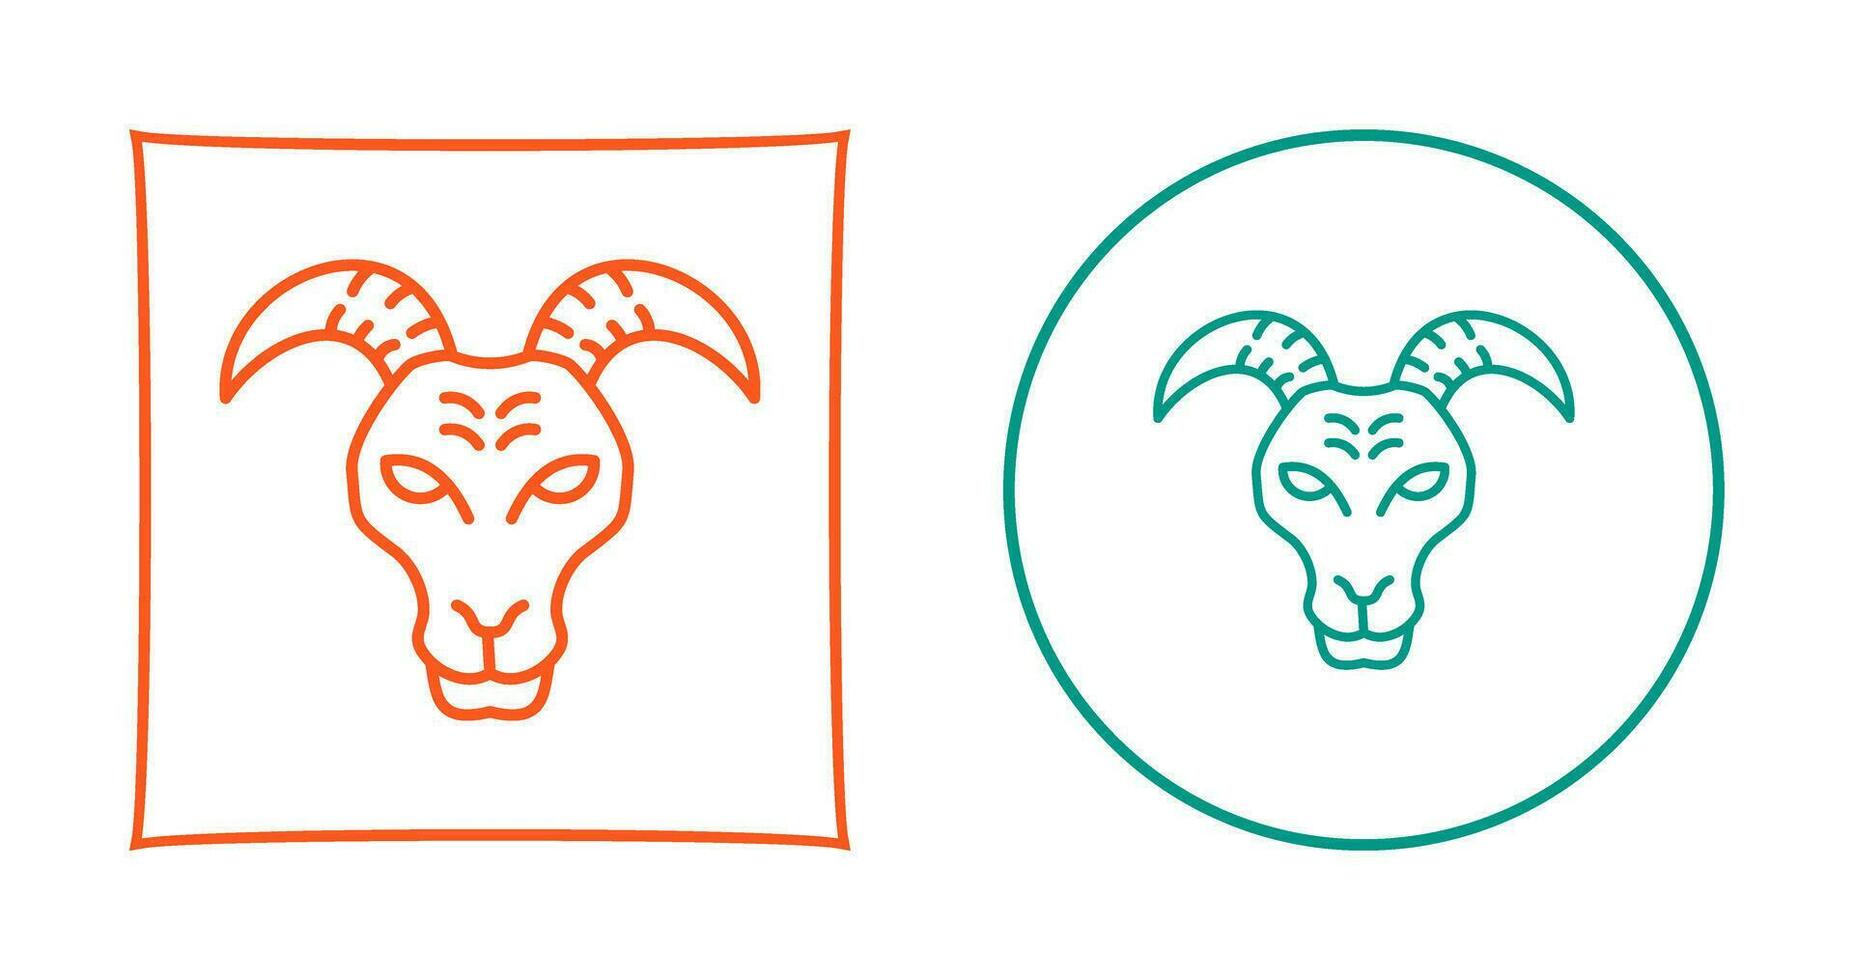 ícone de vetor de cabra